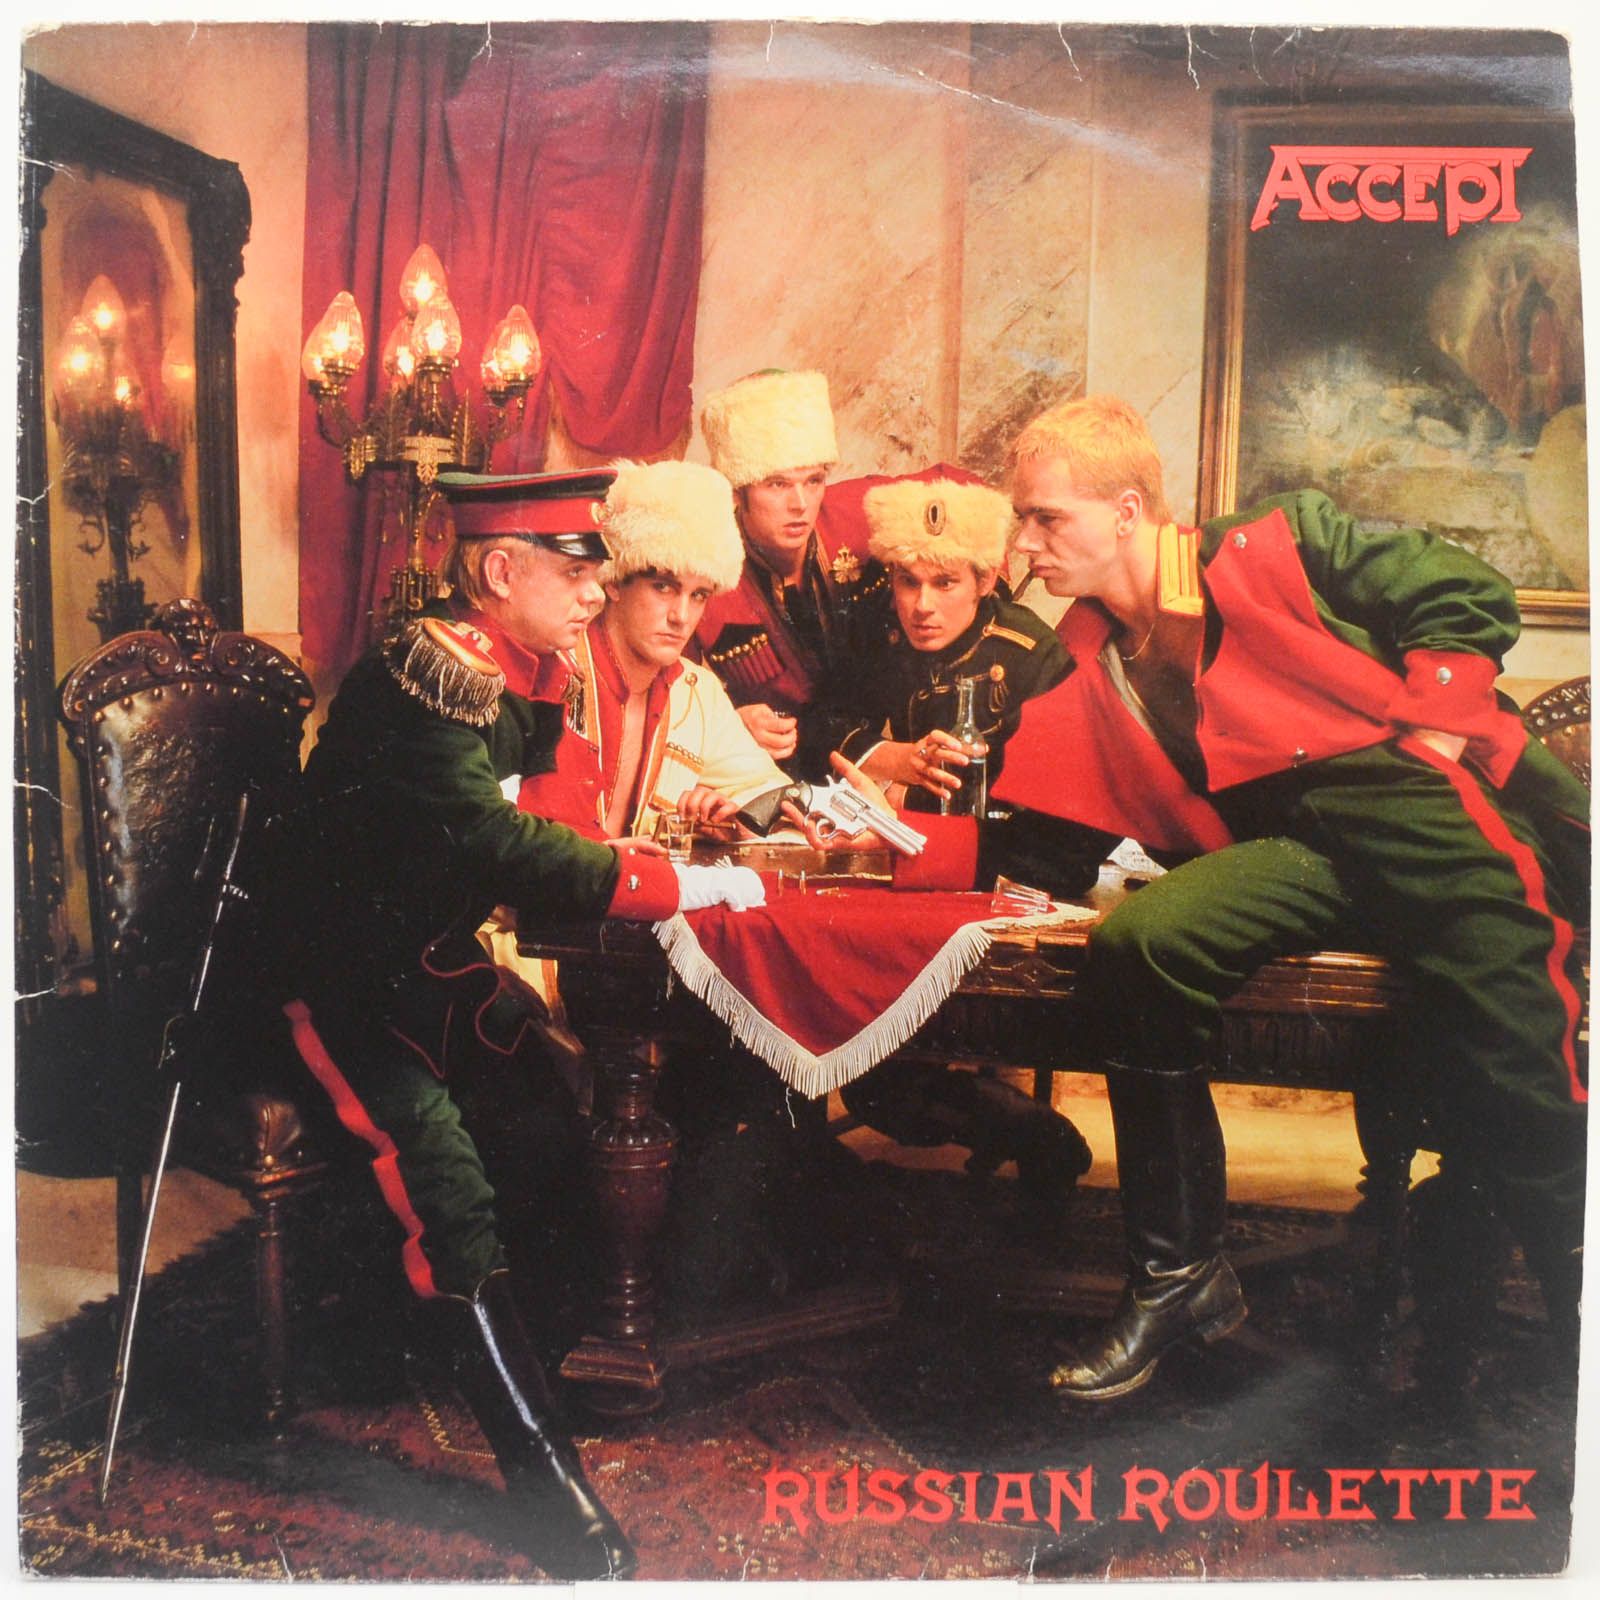 Accept m. 1986 - Russian Roulette. Accept Russian Roulette 1986 обложка. Accept Russian Roulette обложка альбома. Accept 1986 Russian Roulette обложка альбома.